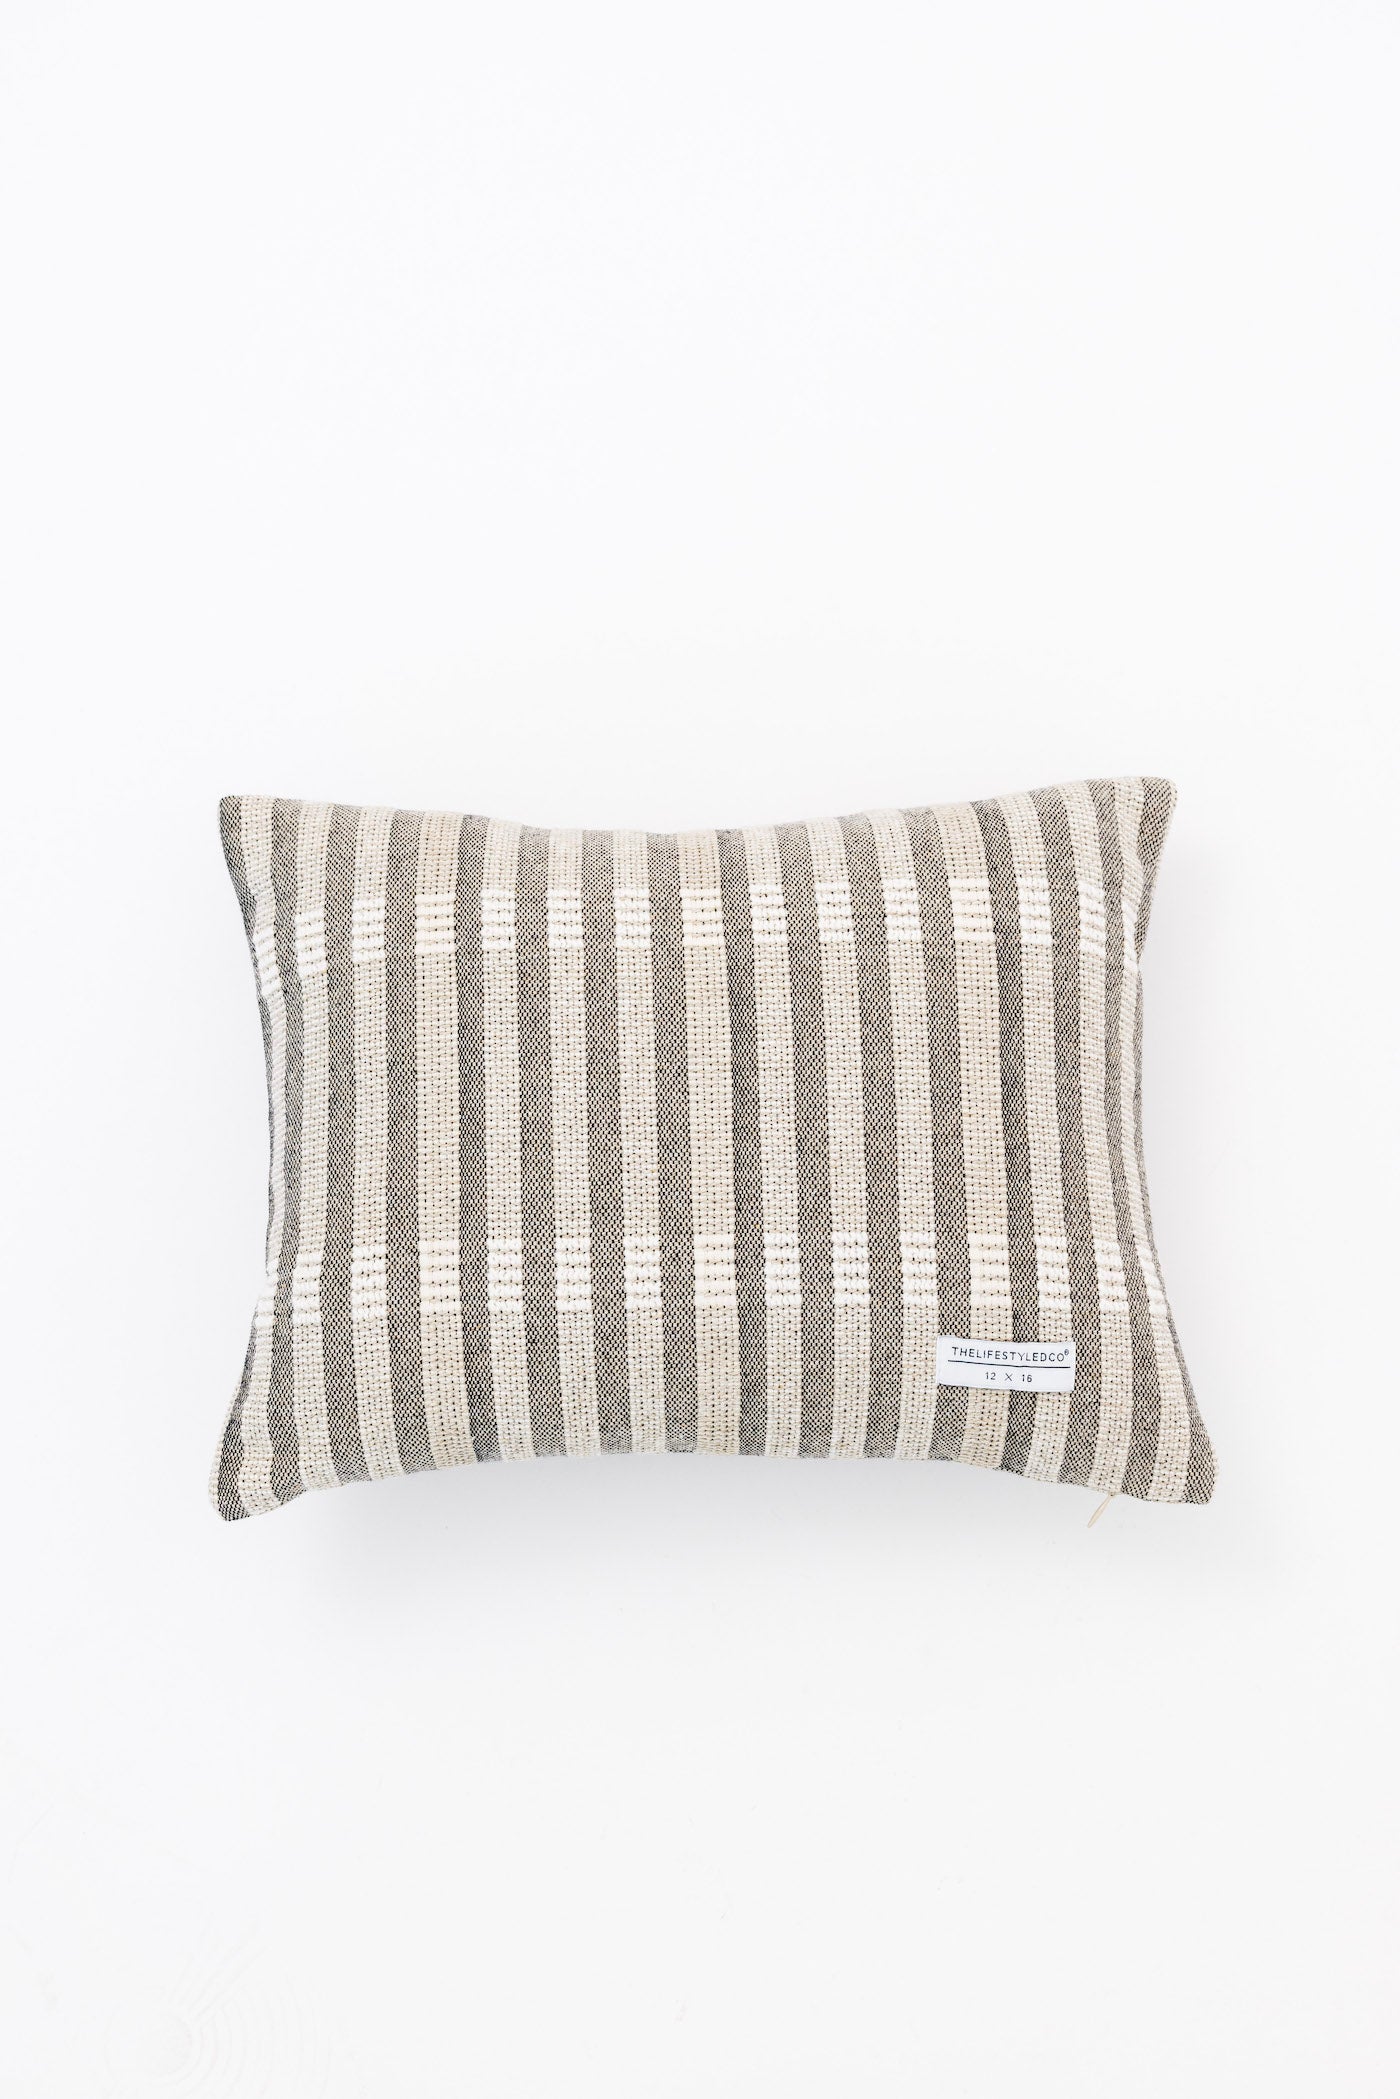 Jones Stripe Pillow - Stone - 3 Sizes